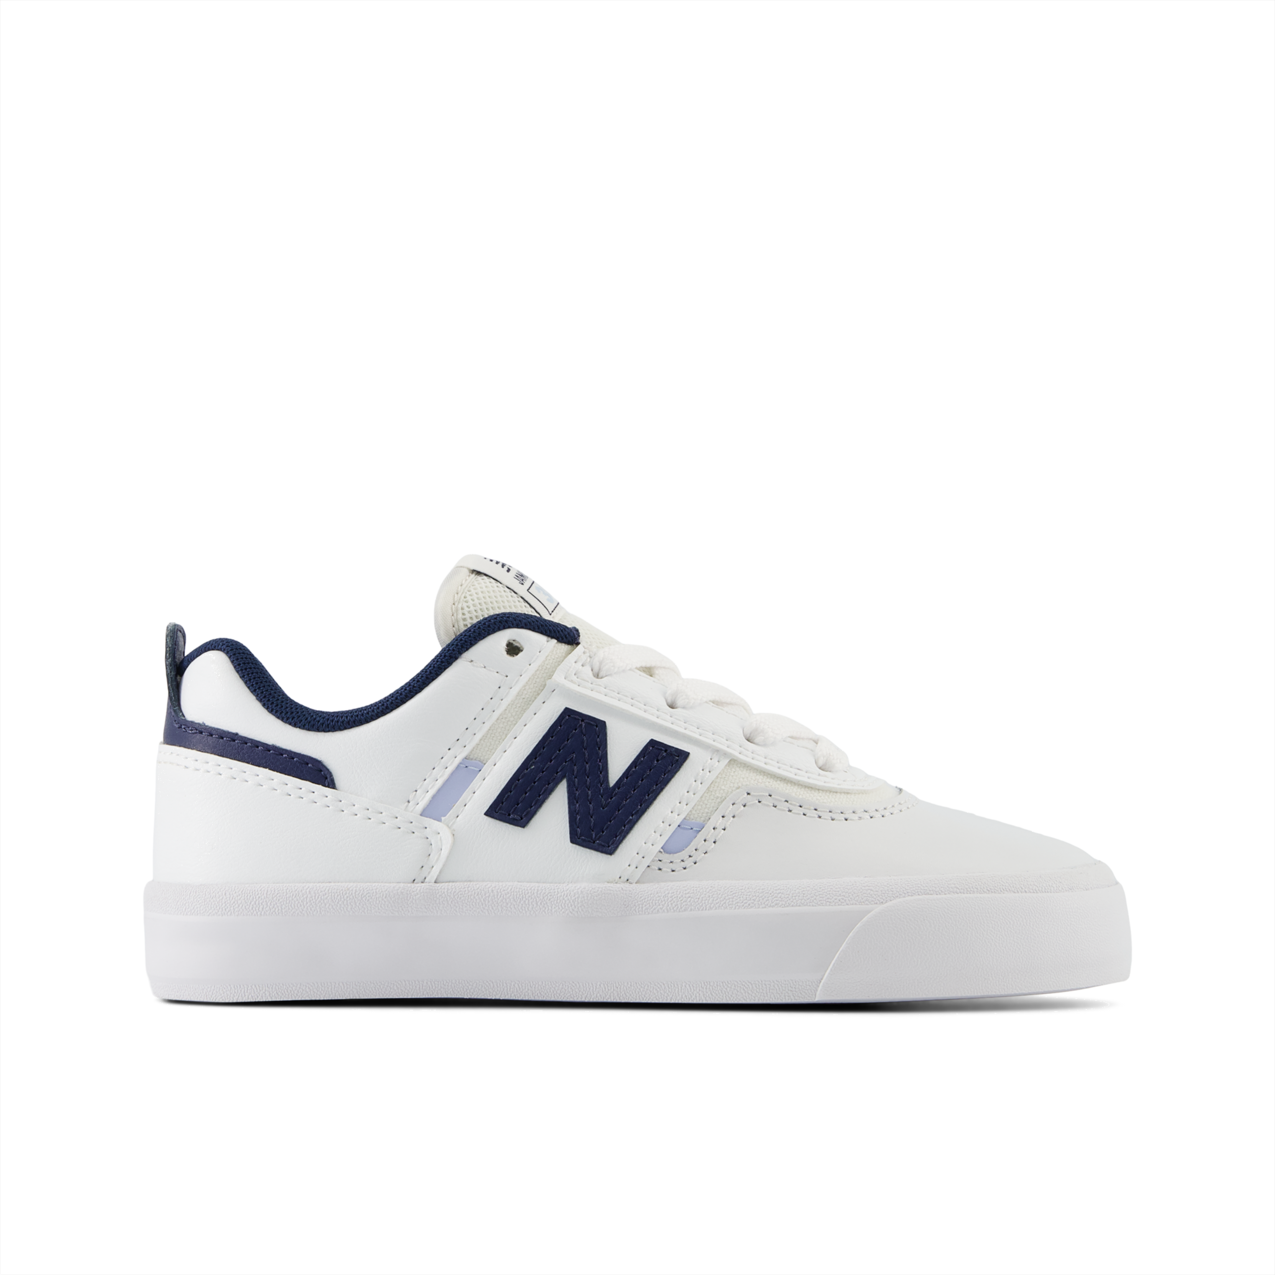 New Balance Numeric Kids Jamie Foy 306 White Nb Navy Shoes